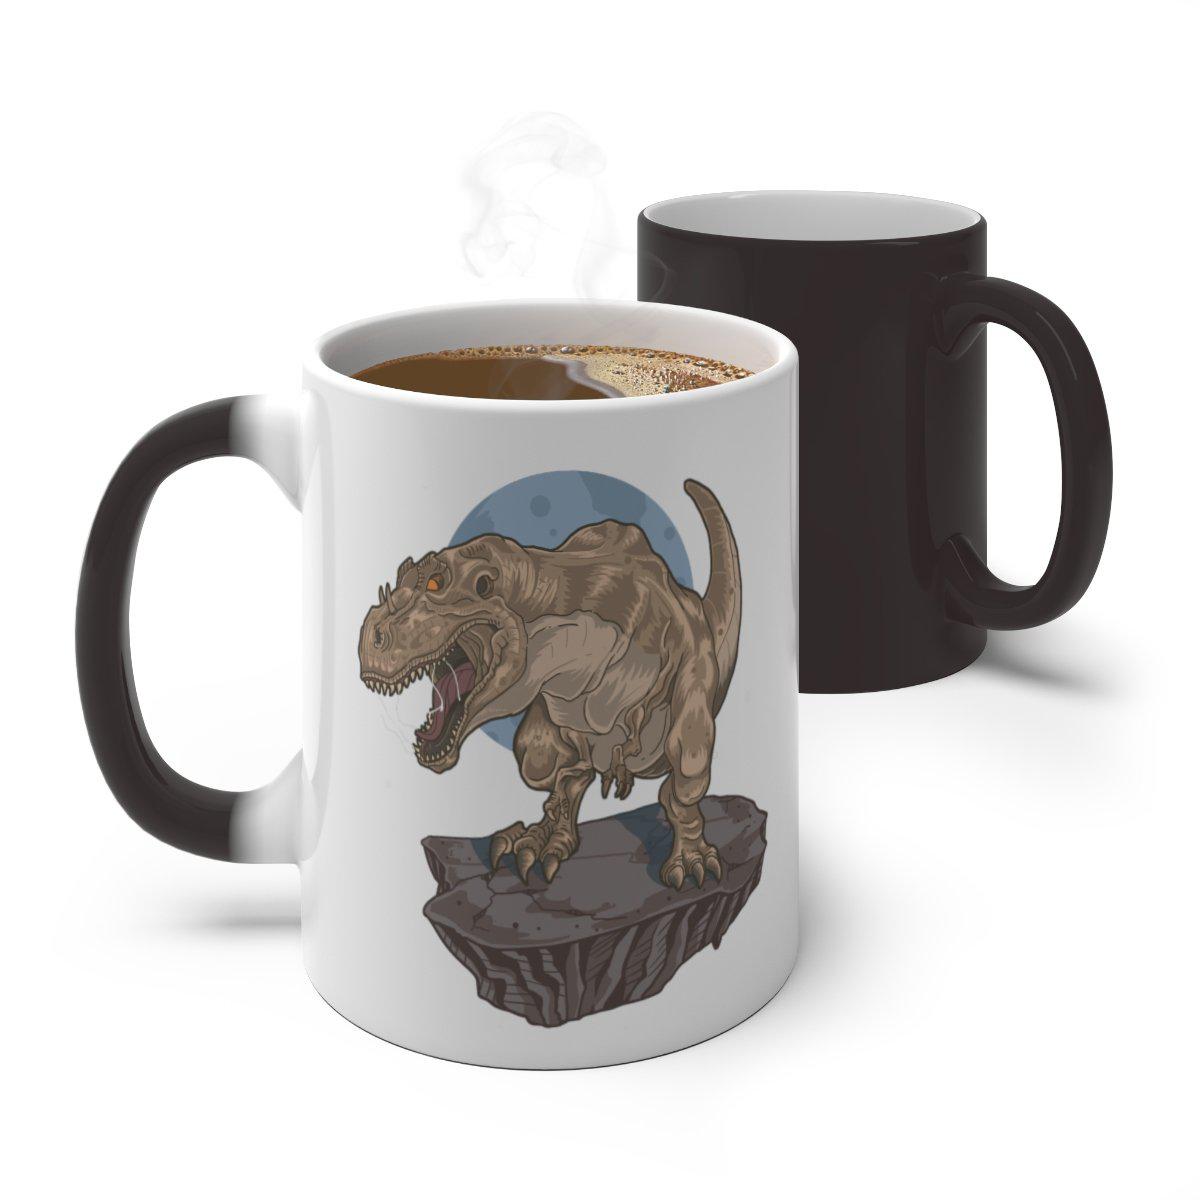 dinosaur mug that changes with heat